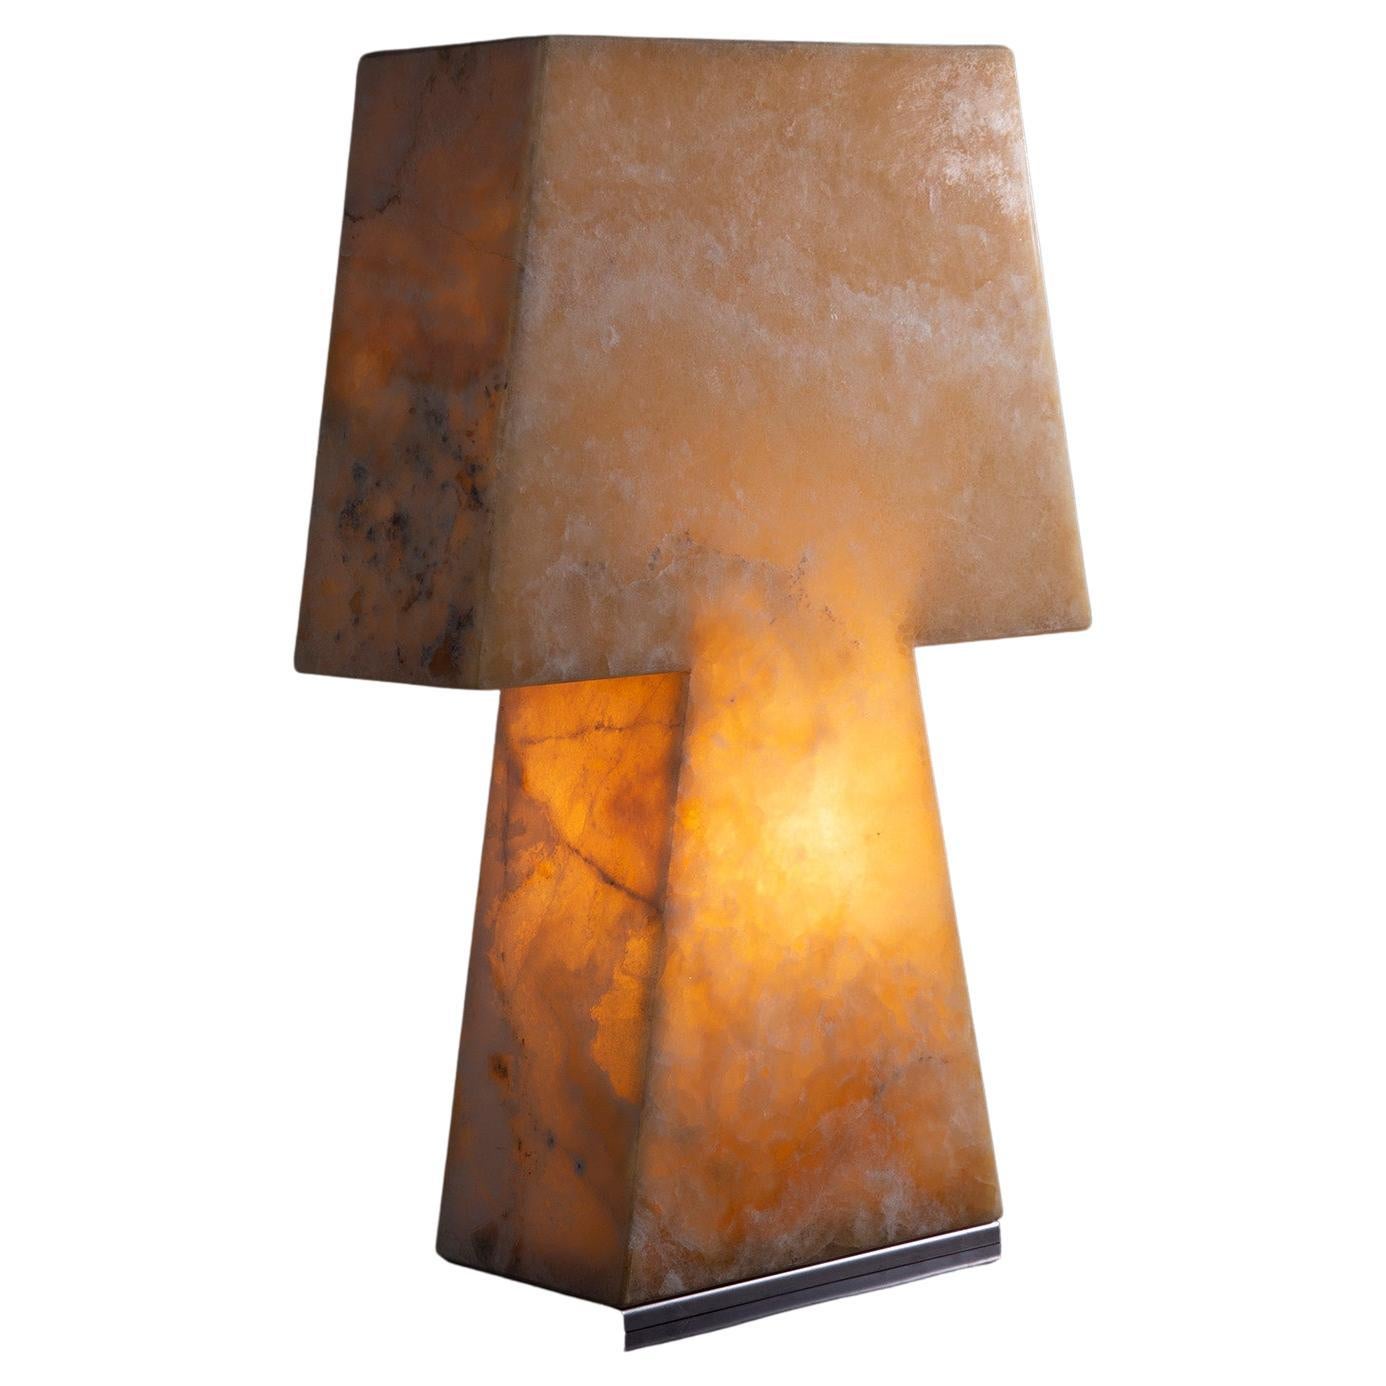 Contemporary Italian alabaster table lamp